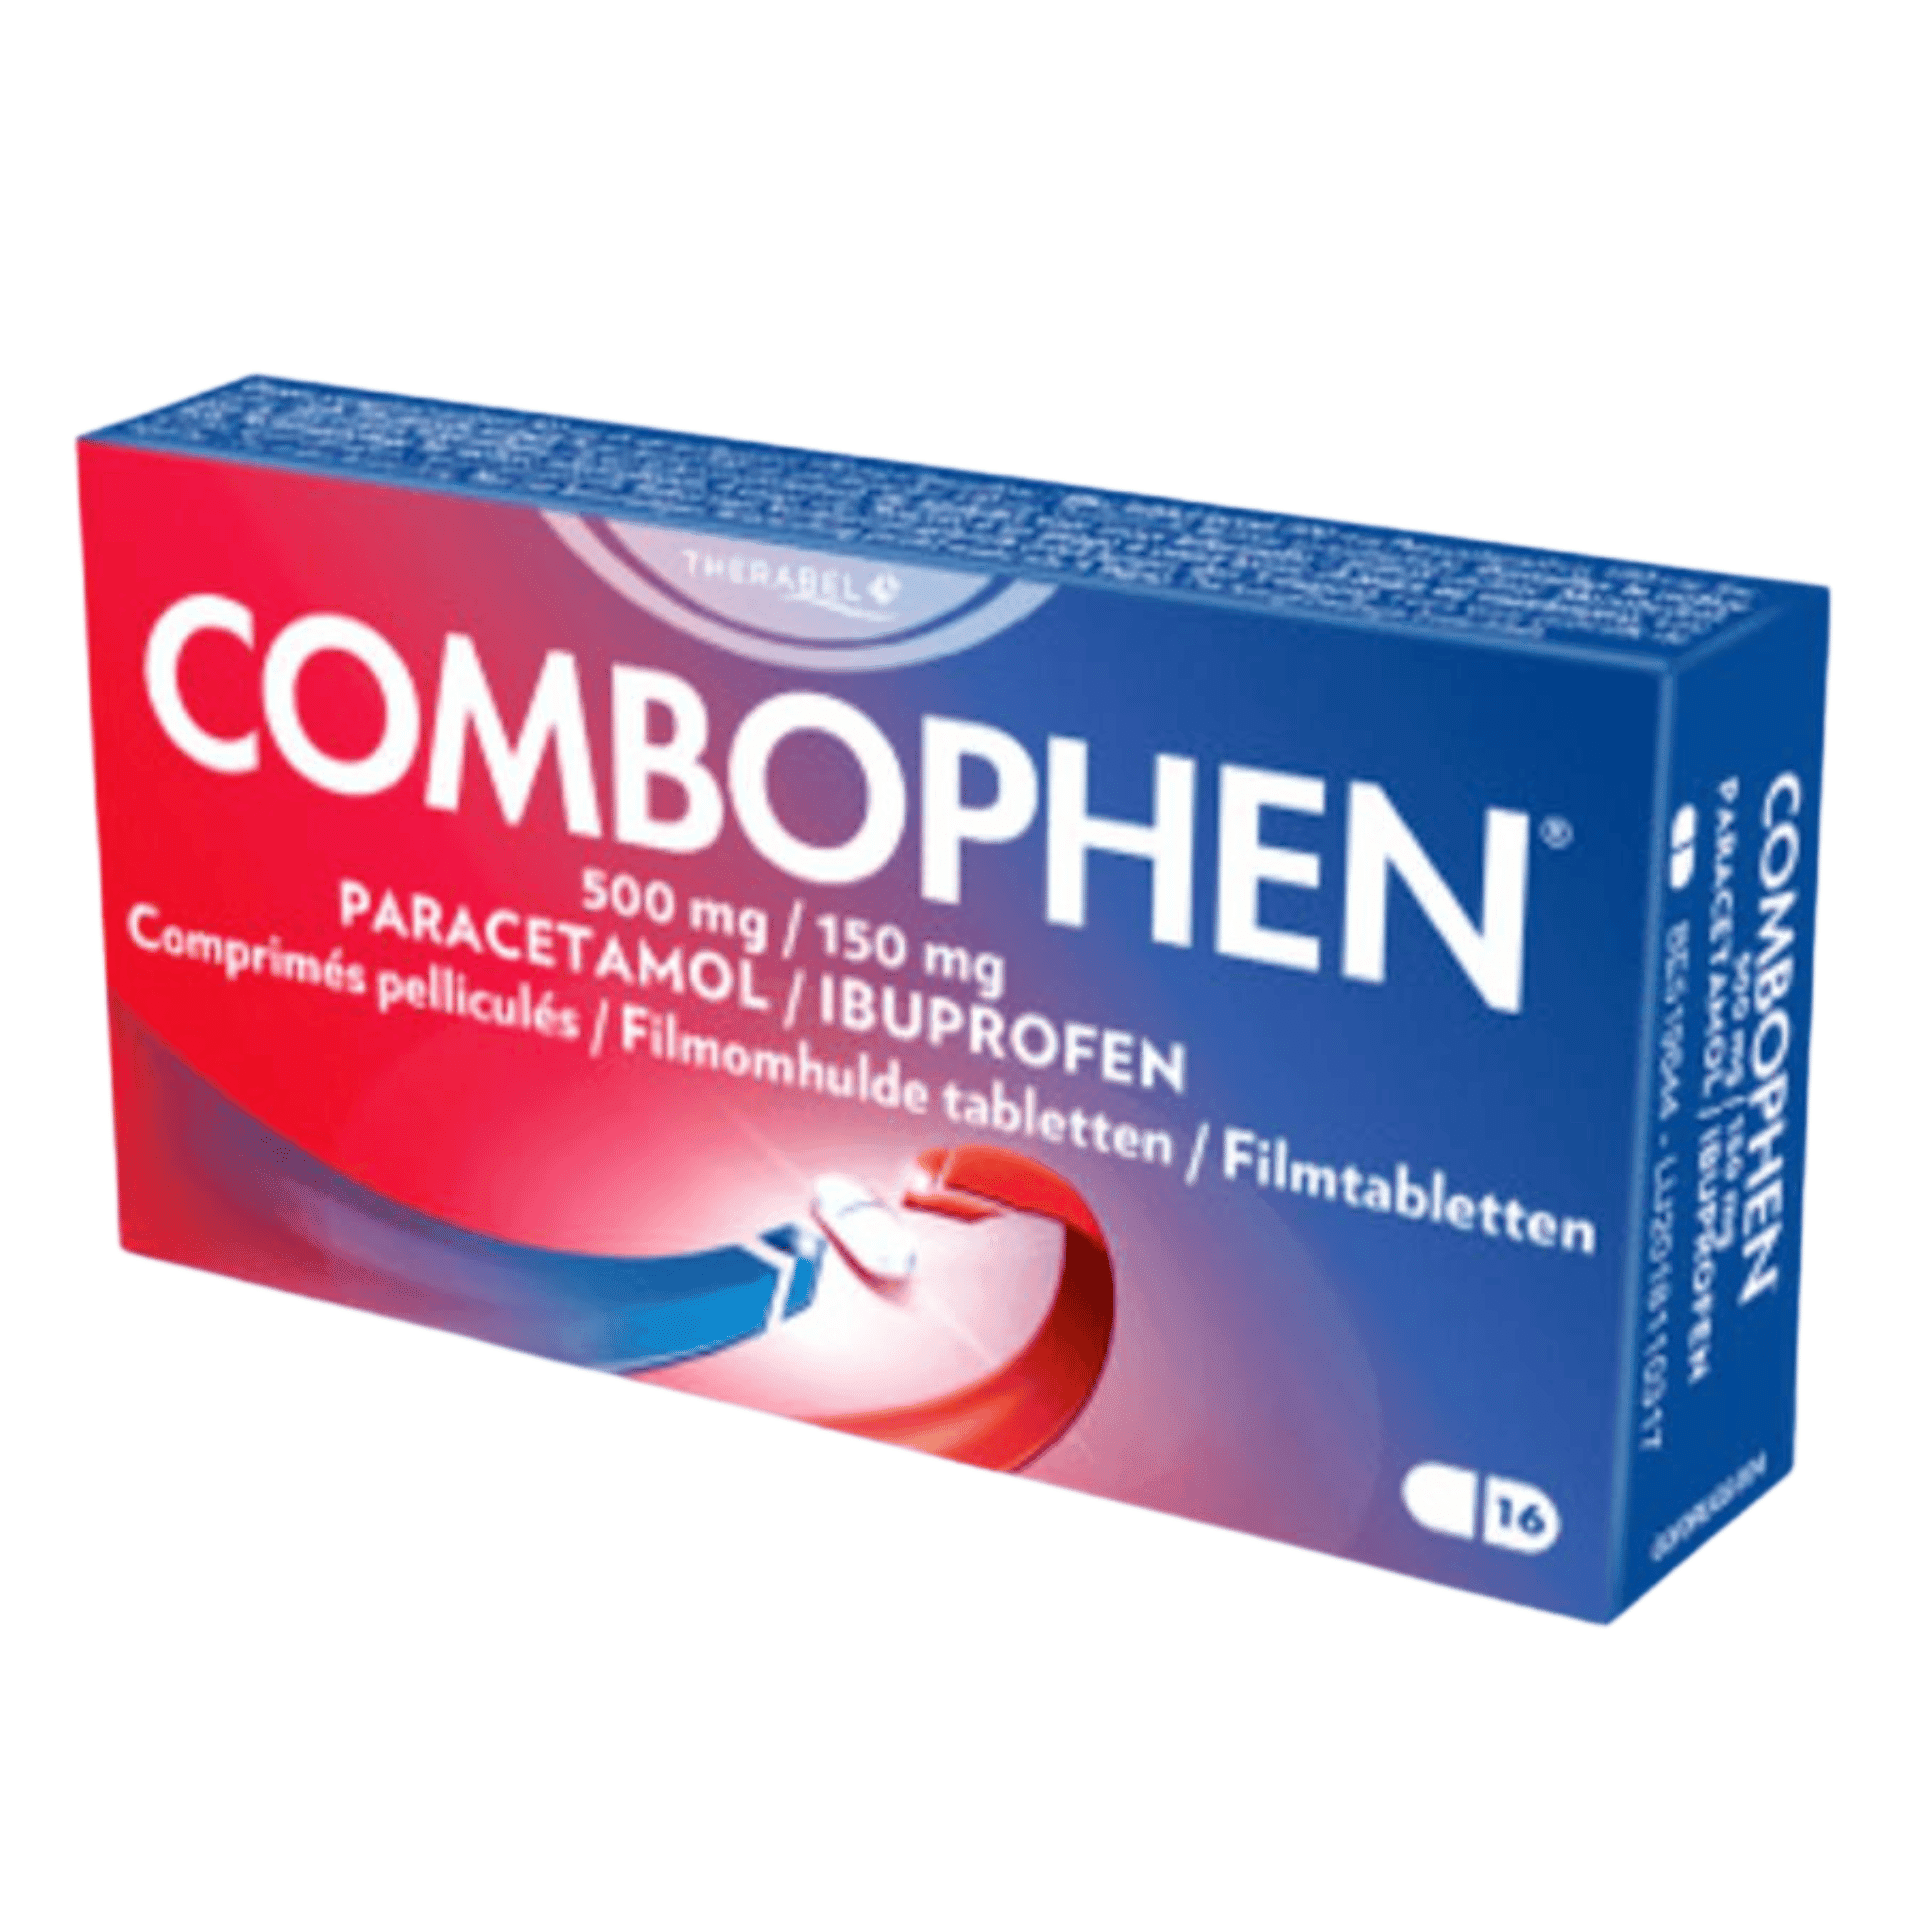 Combophen 500 mg/150 mg